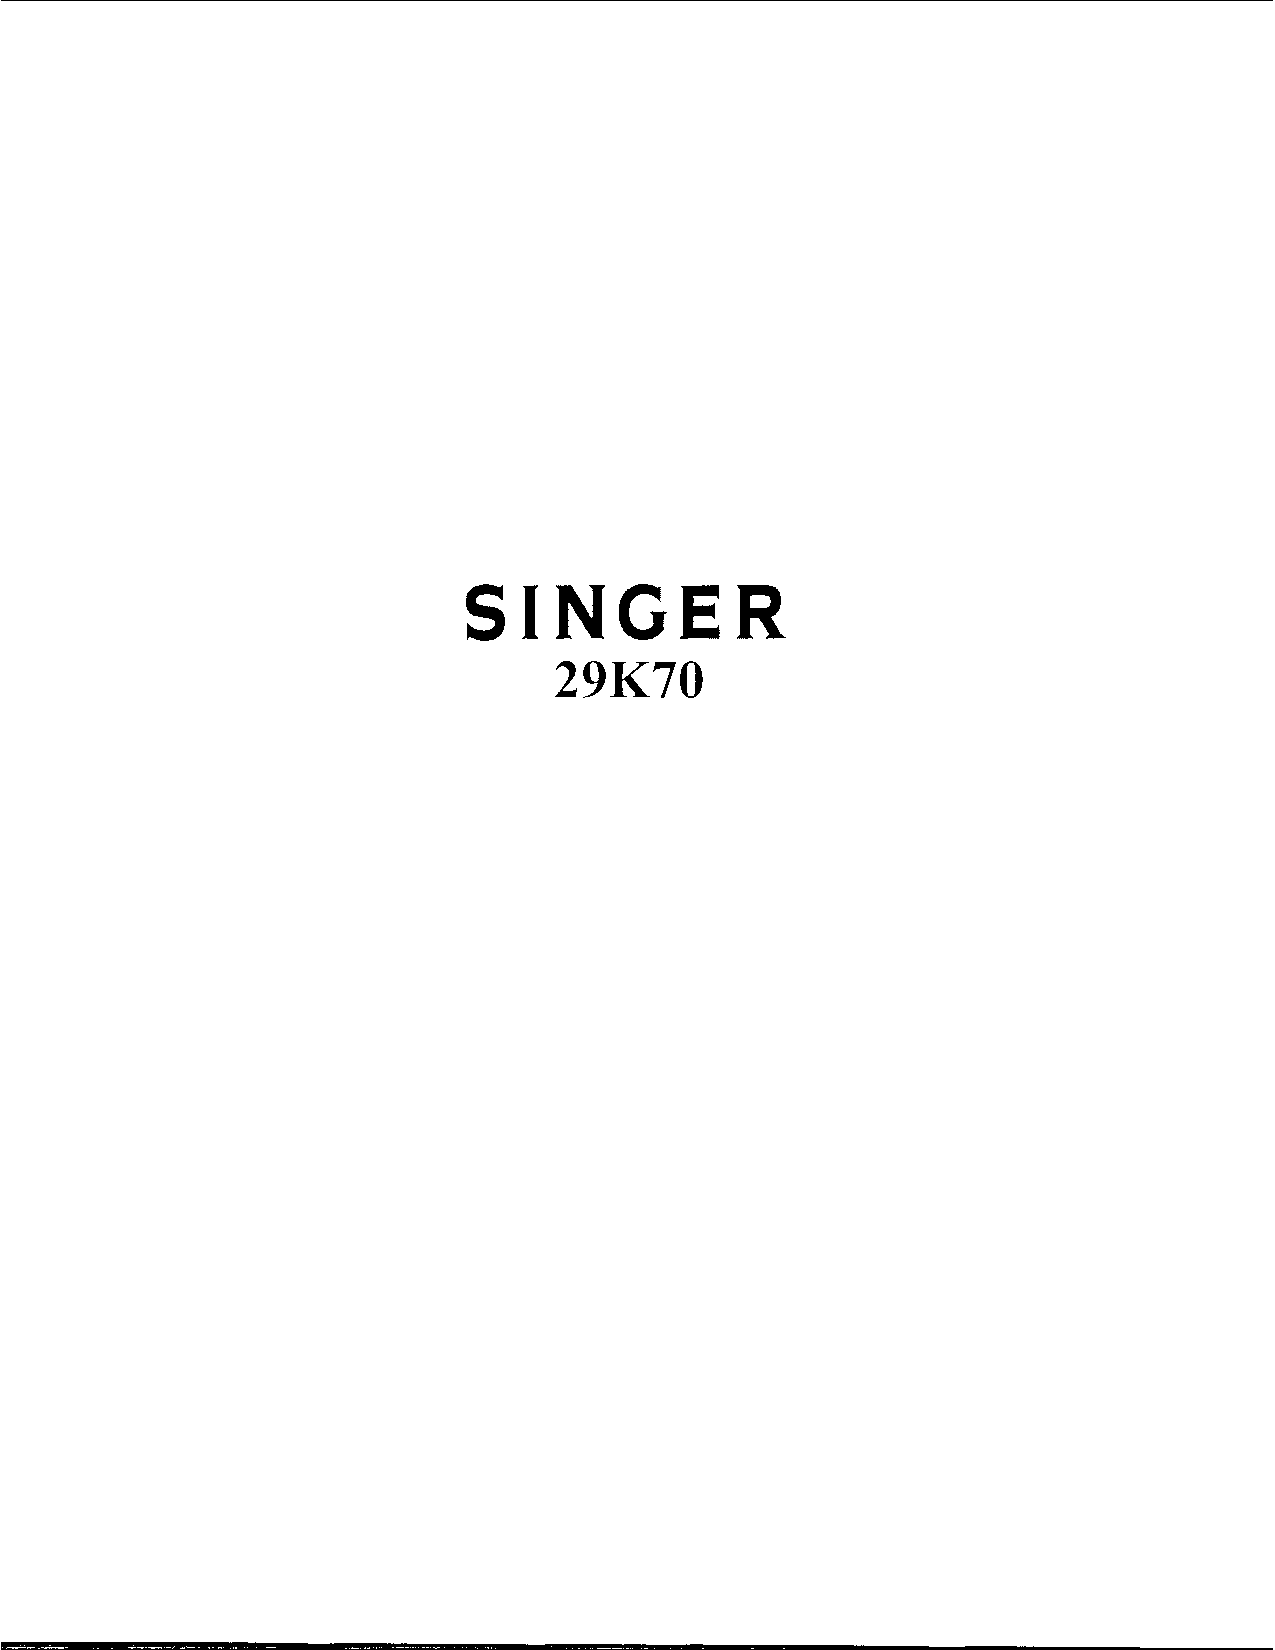 Singer 29K70 User Manual